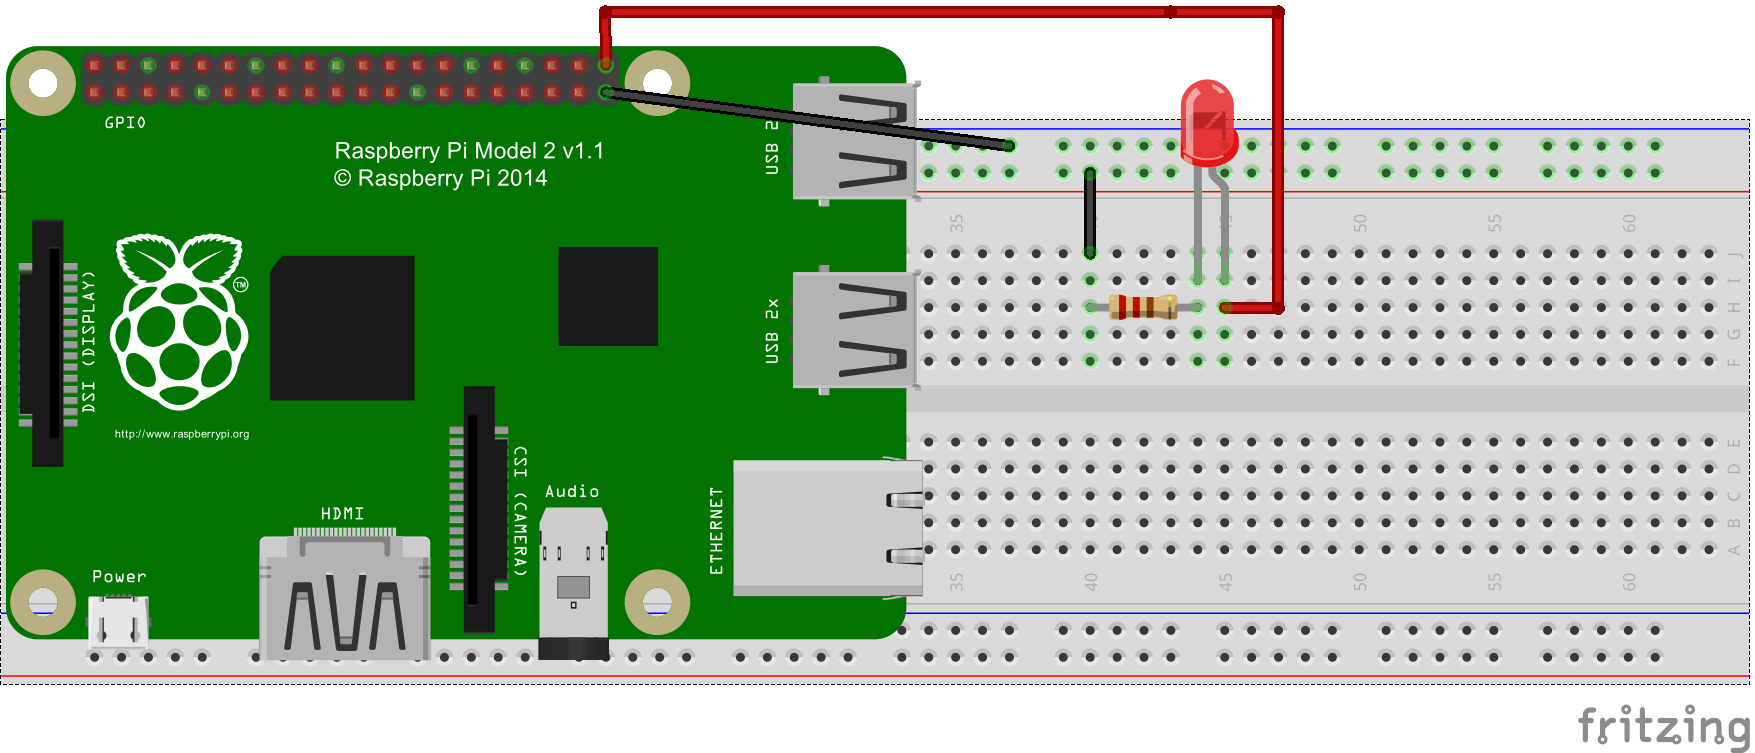 Output signal from Raspberry Pi GPIO pin to LED